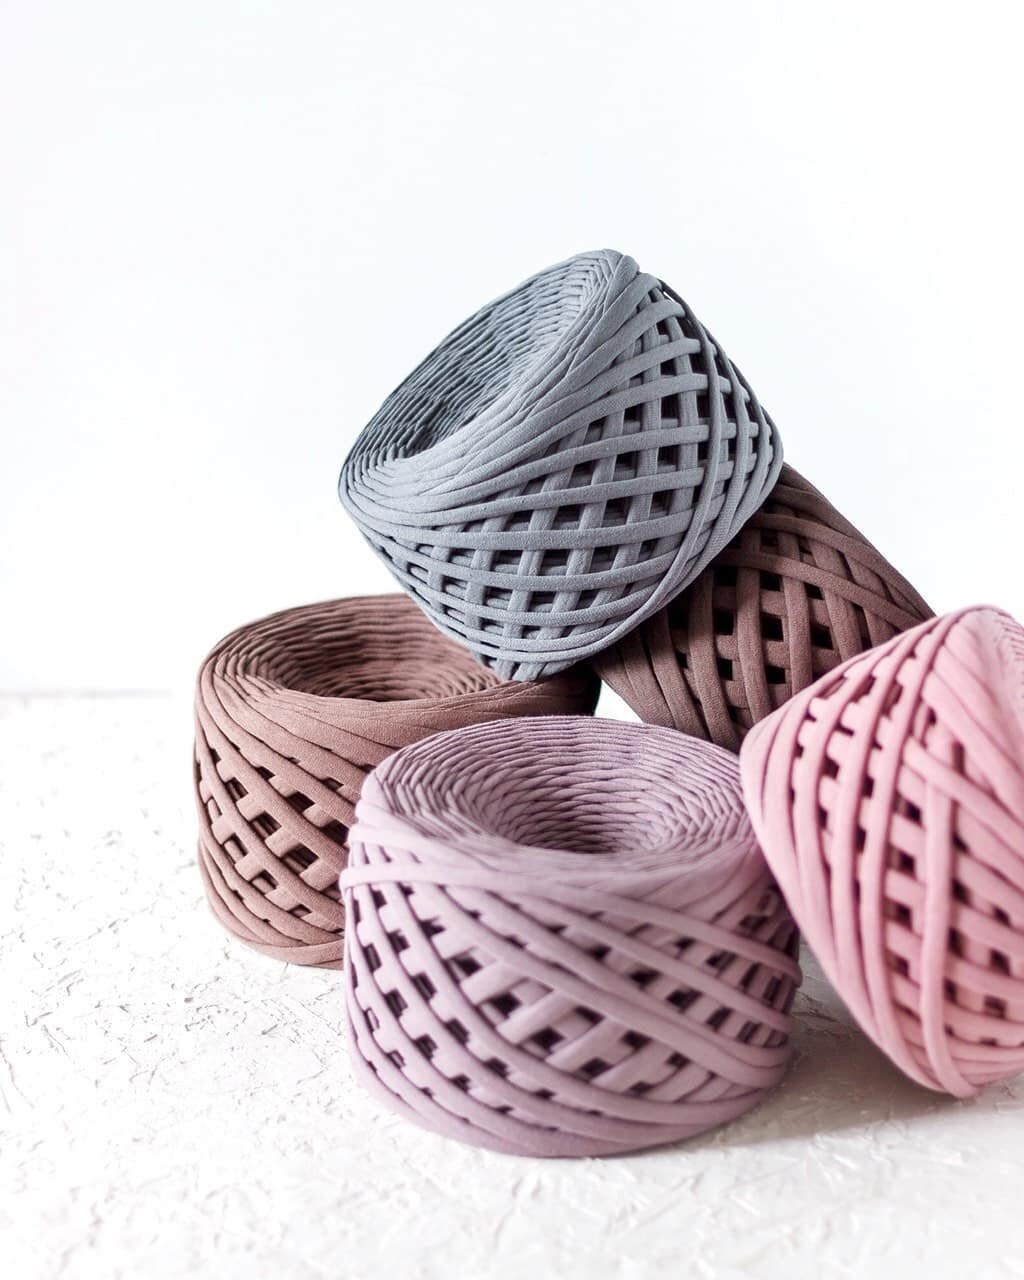 JeogYong T-Shirt Yarn, 200g/196ft Elastic Fabric Cloth Knitting T Shirt  Yarn, Flesh Pink Thick Crochet Yarn for Crocheting Bags/Baskets/Rugs, Home